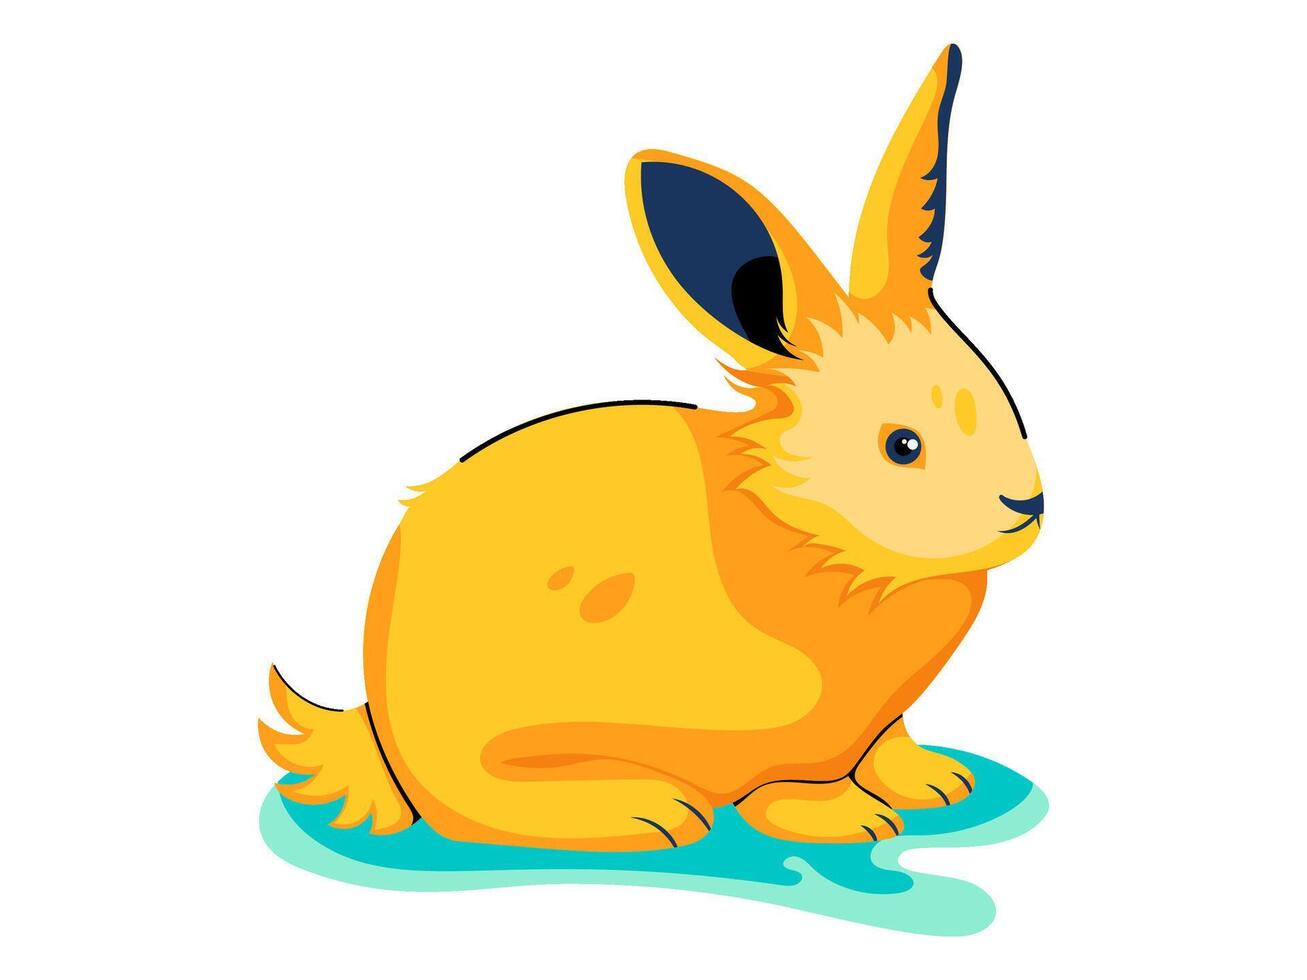 rabbit animal design with modern illustration concept style for badge farm agriculture sticker illustration vector